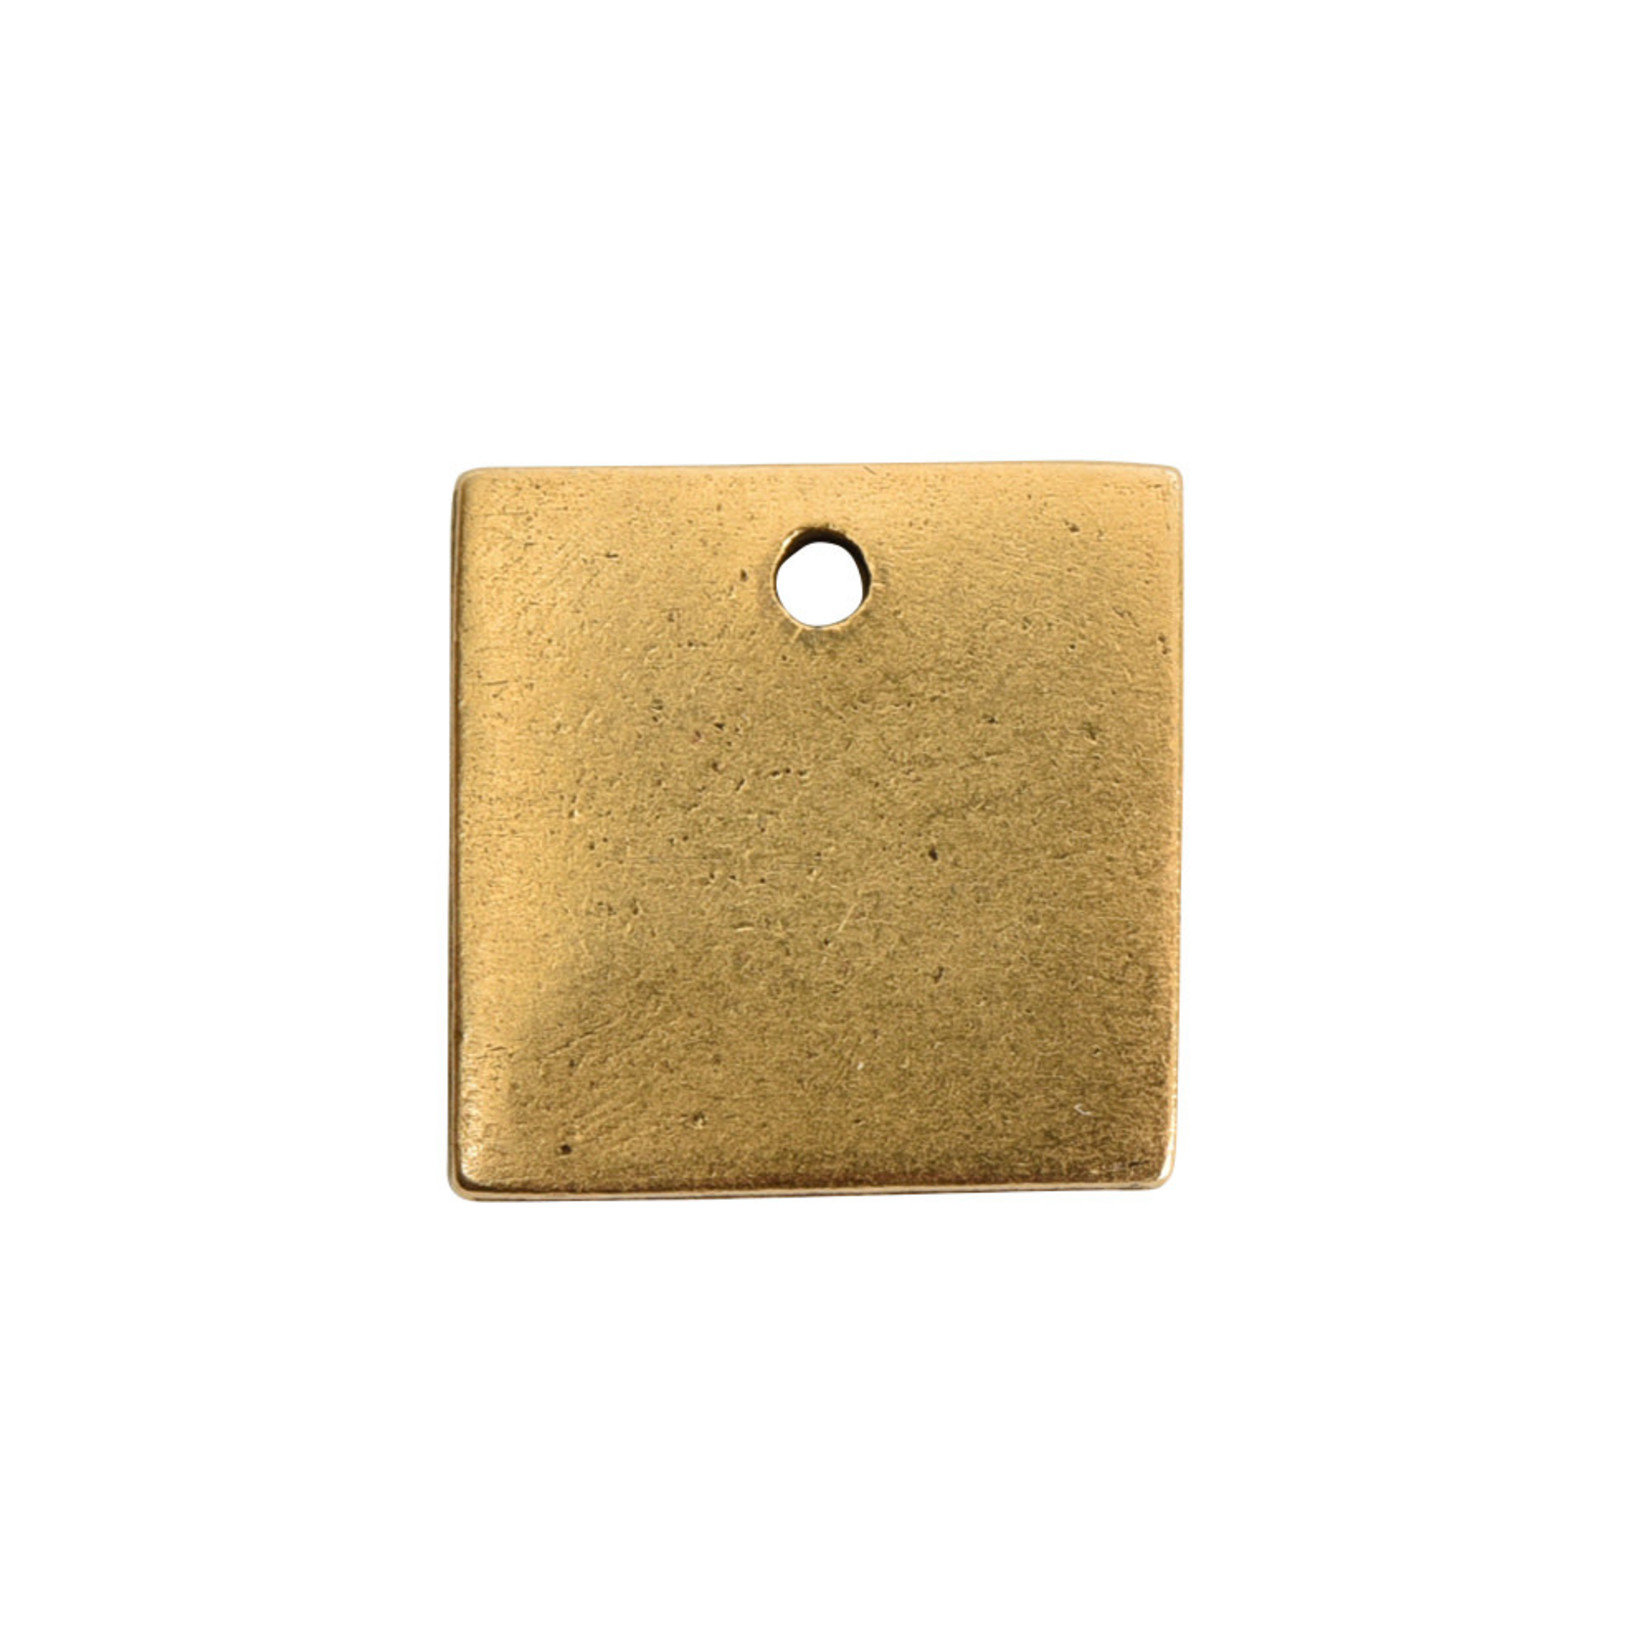 Nunn Design Nunn Design Antique Gold Flat Tag Mini Square Single